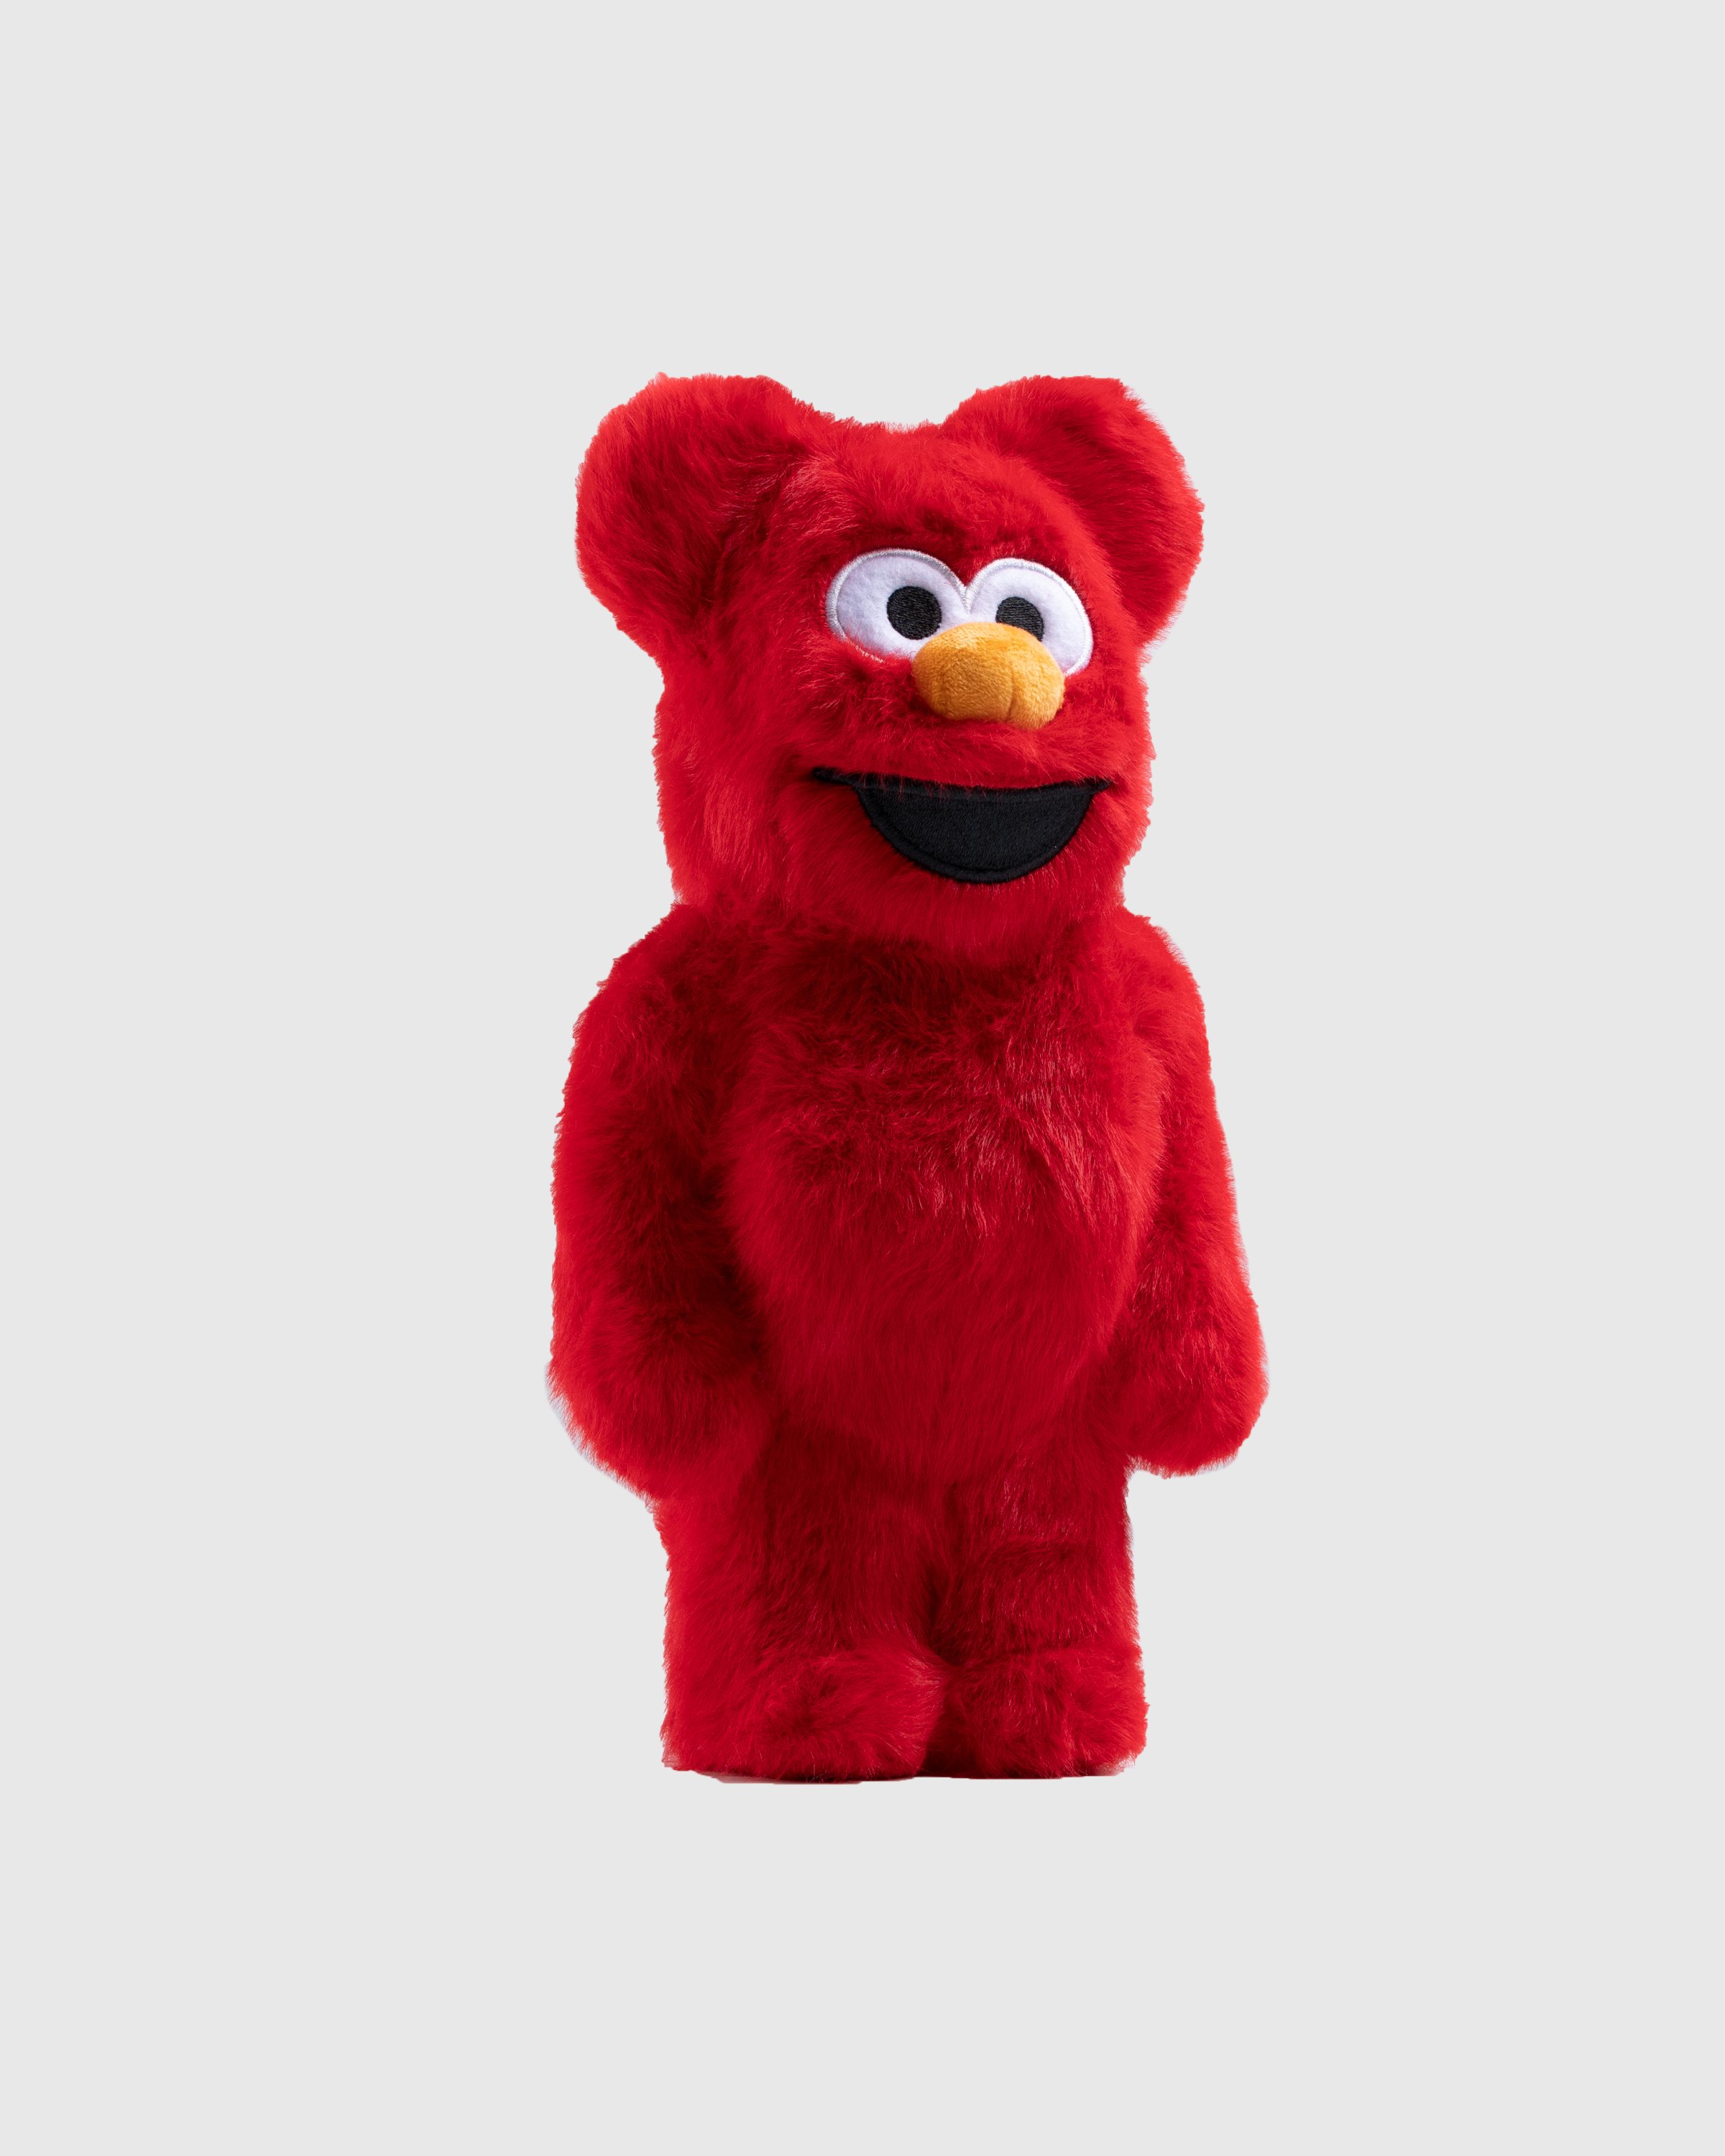 Medicom - Be@rbrick Elmo Costume Version 2 400% Red - Lifestyle - Red - Image 2